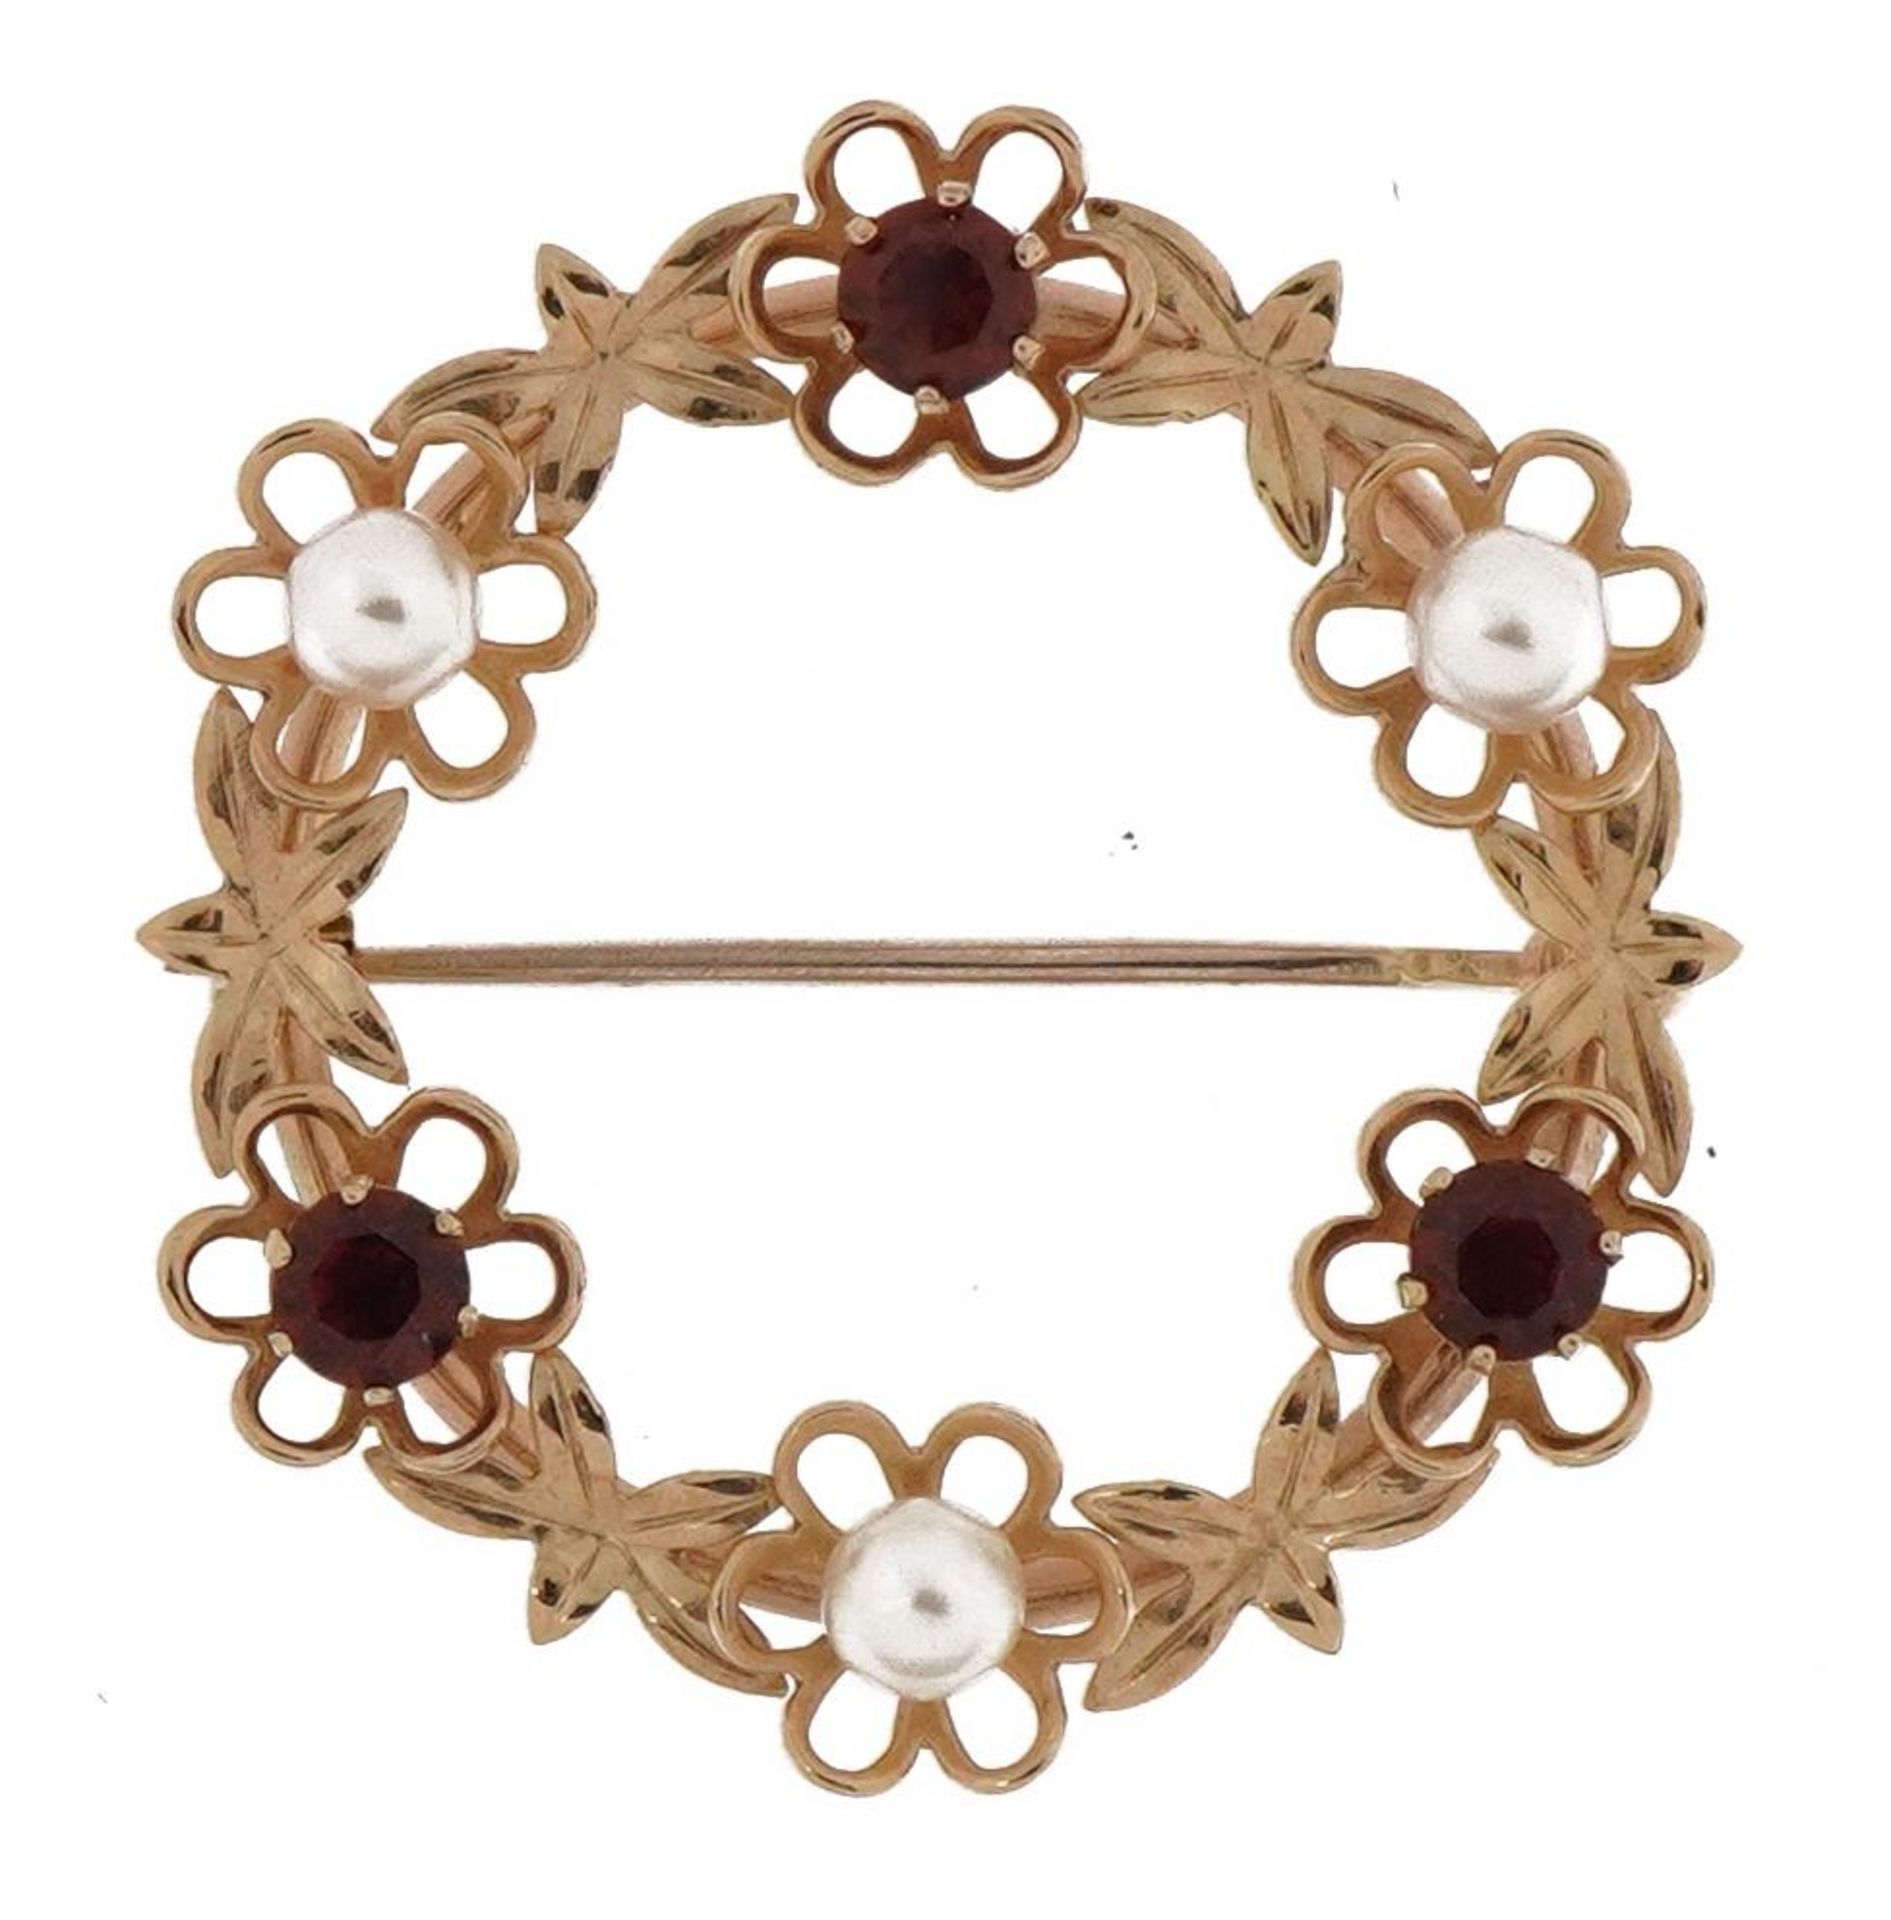 9ct gold garnet and pearl floral wreath brooch, 3.5cm in diameter, 4.3g